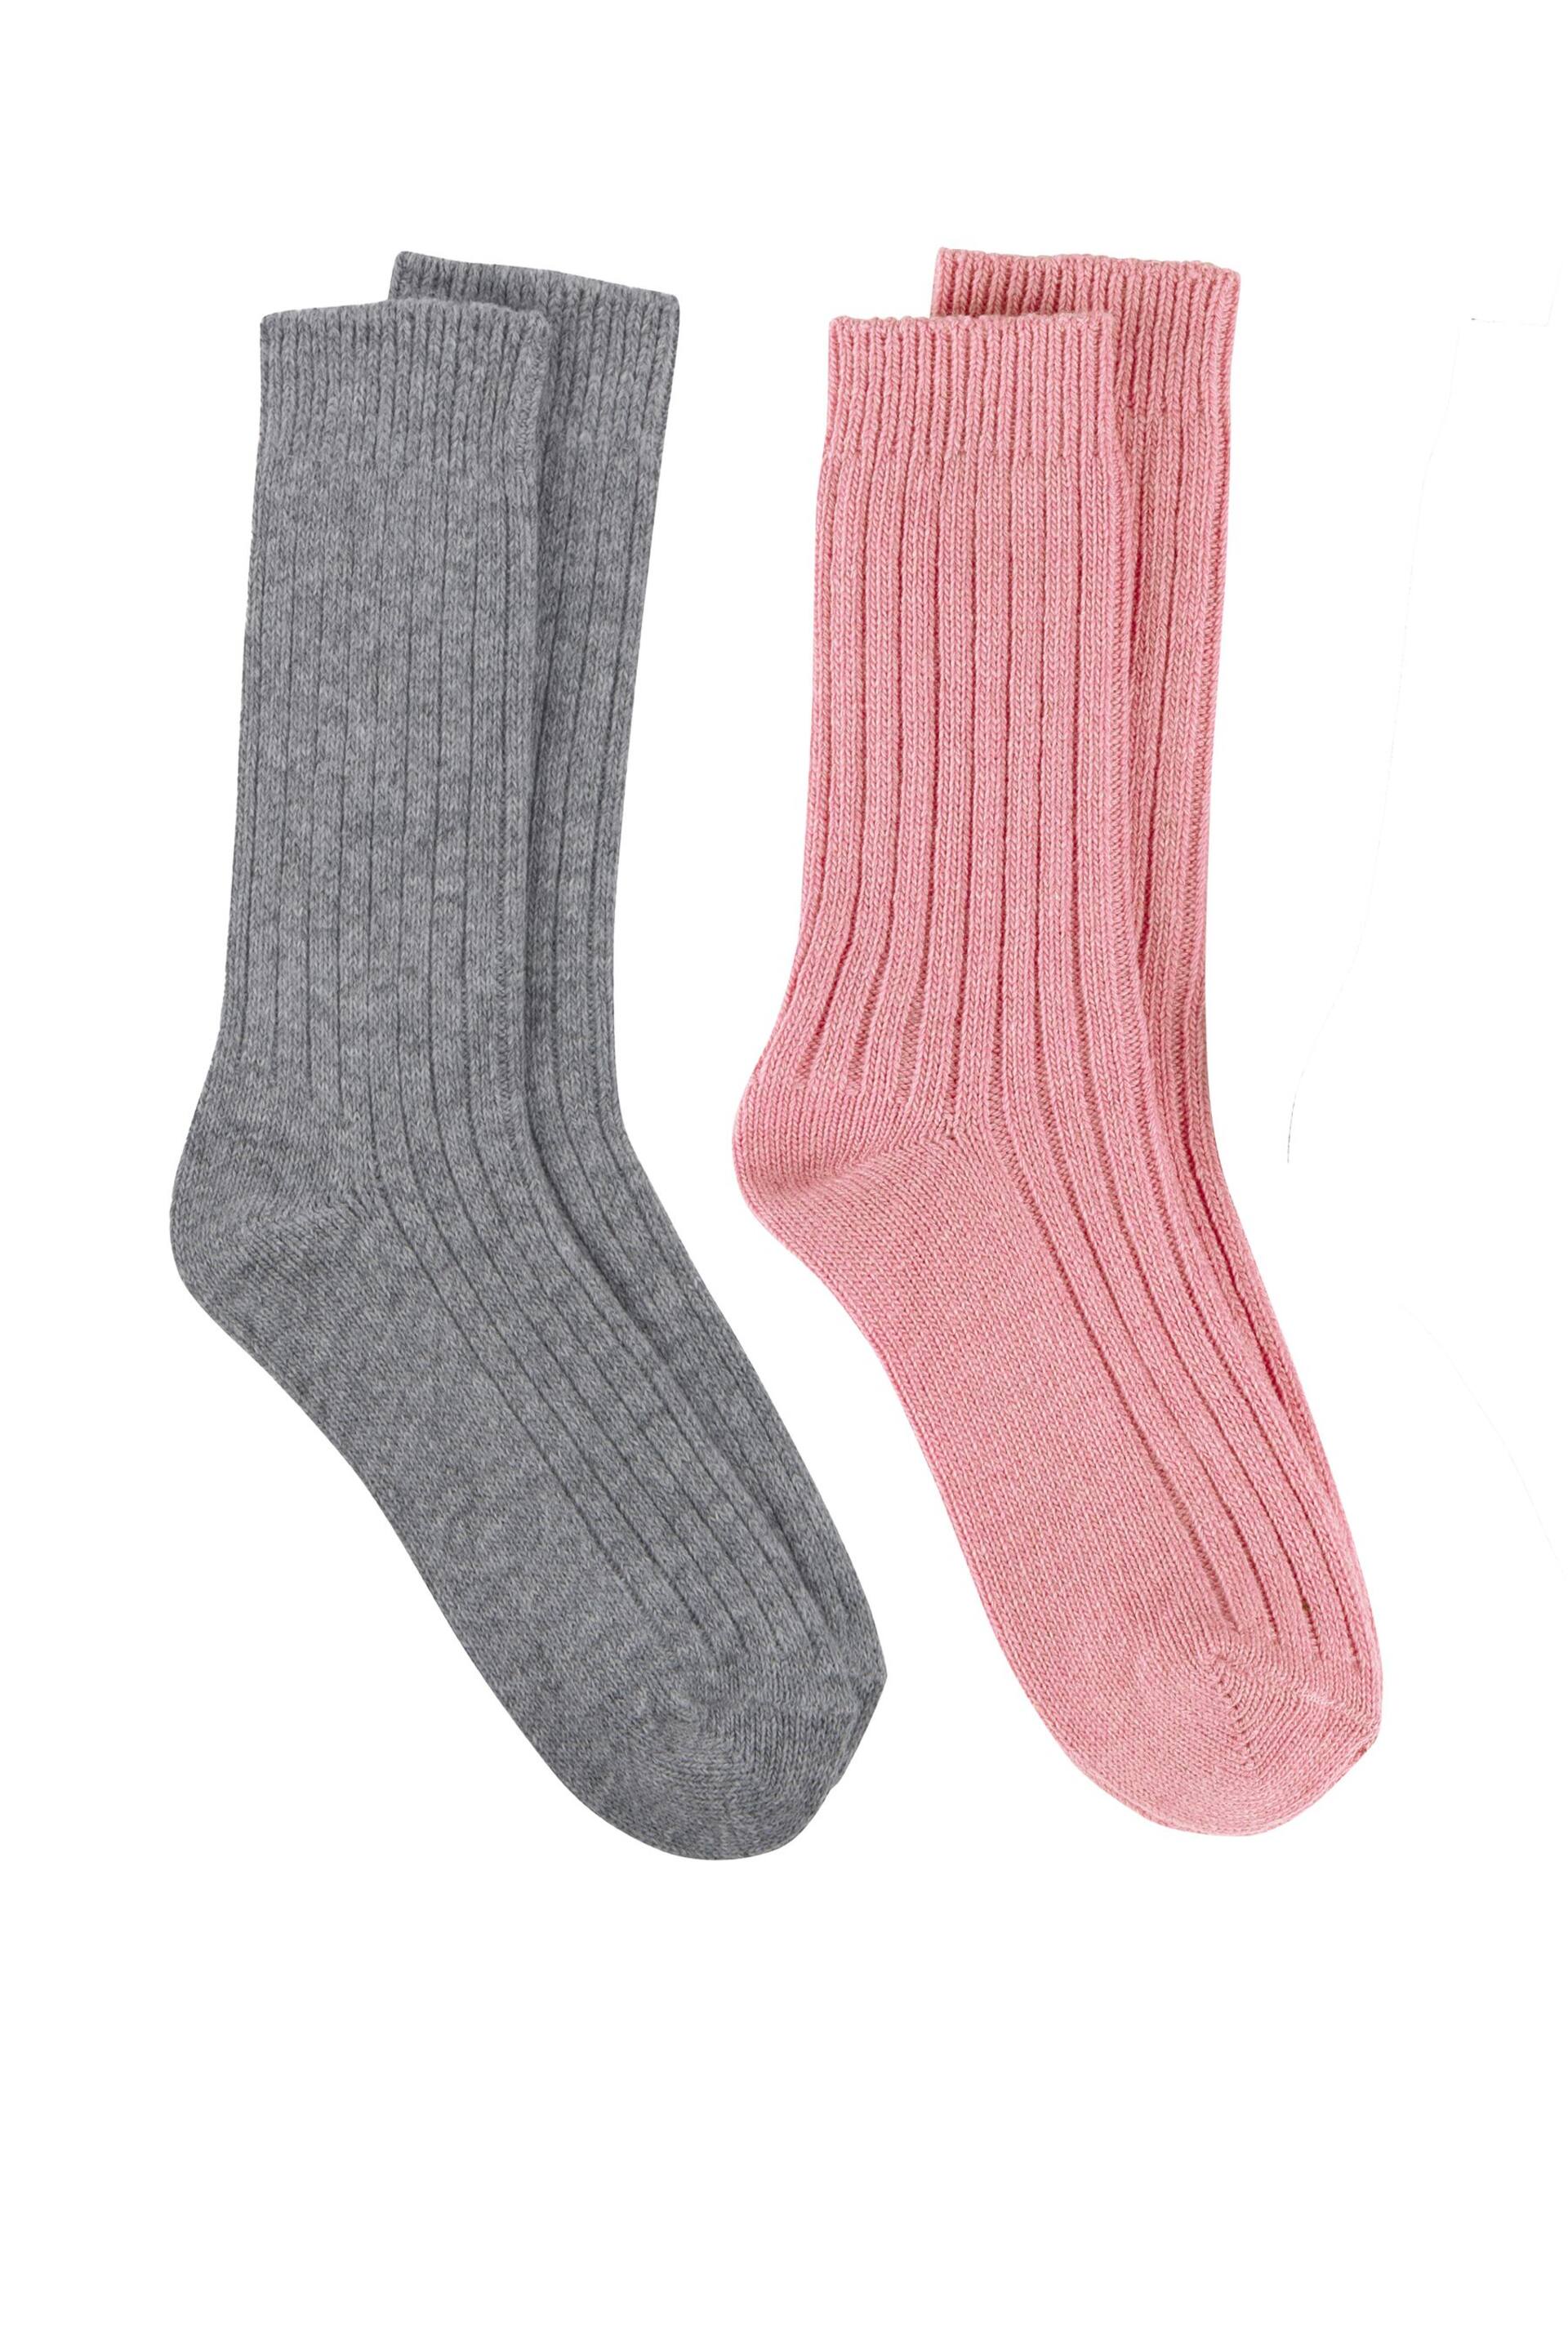 Totes Pink/Grey Ladies 2 Pack Cashmere Blend Ankle Socks - Image 1 of 5